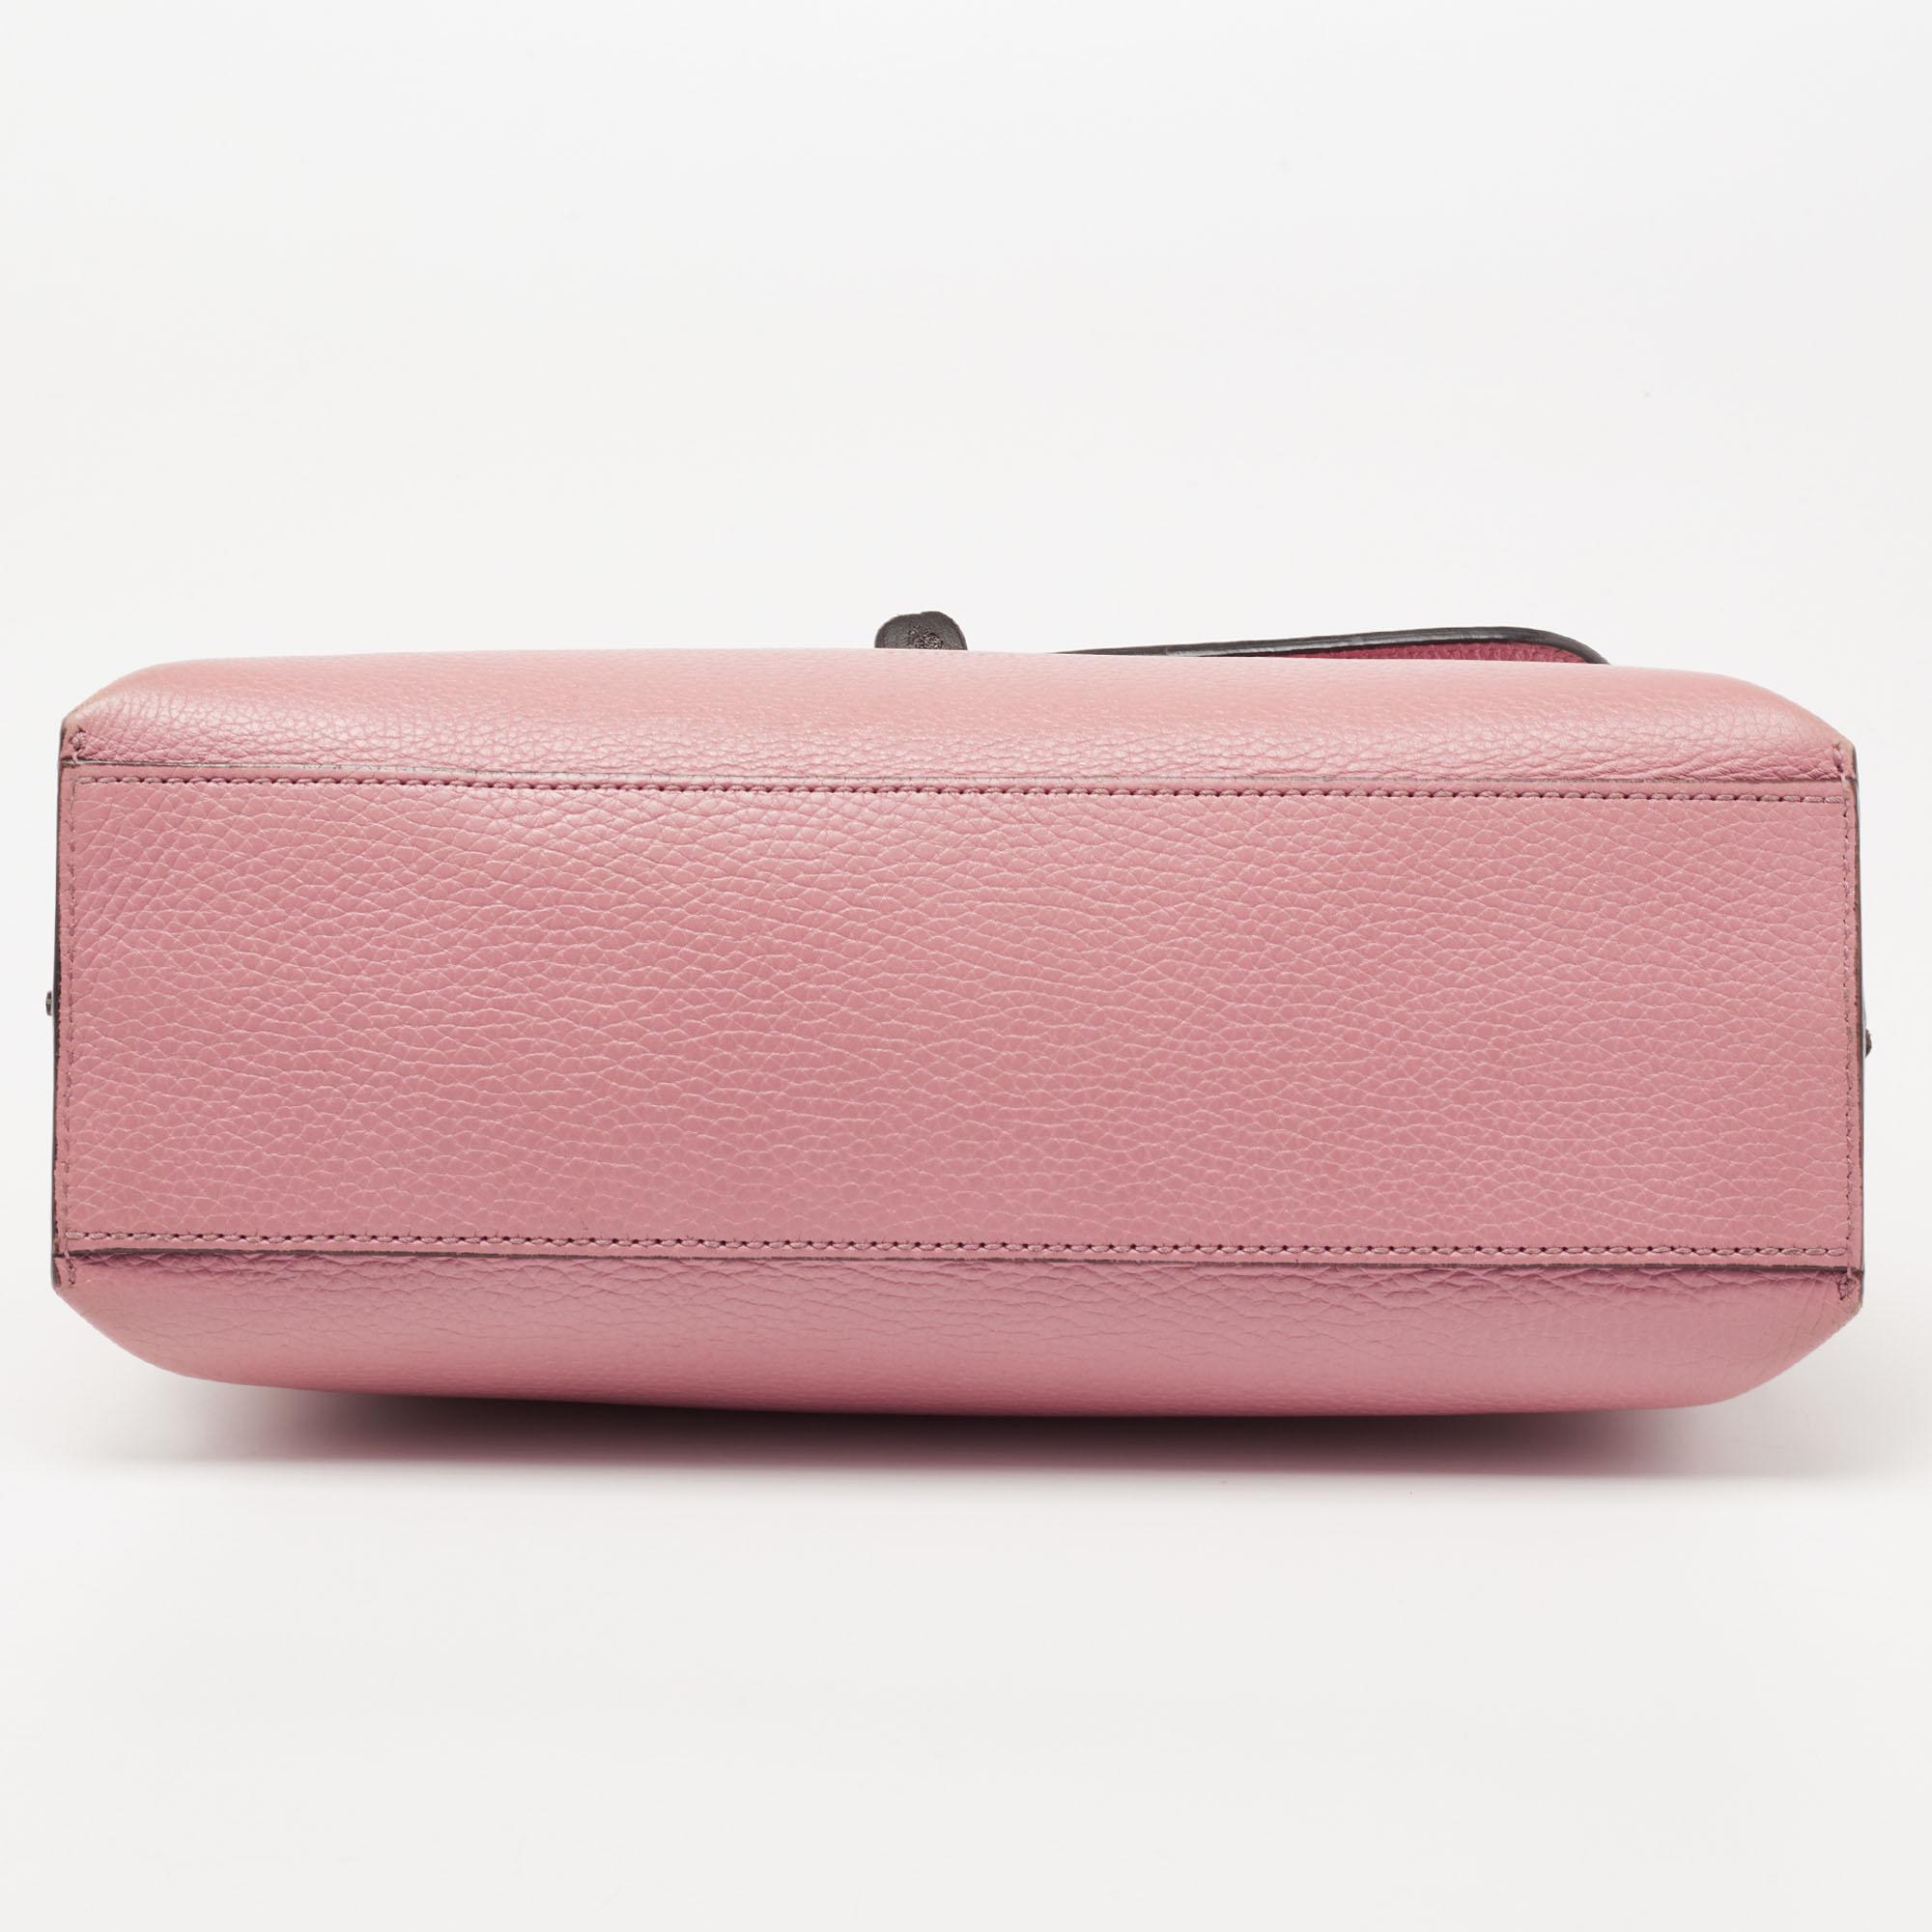 gucci pink top handle bag